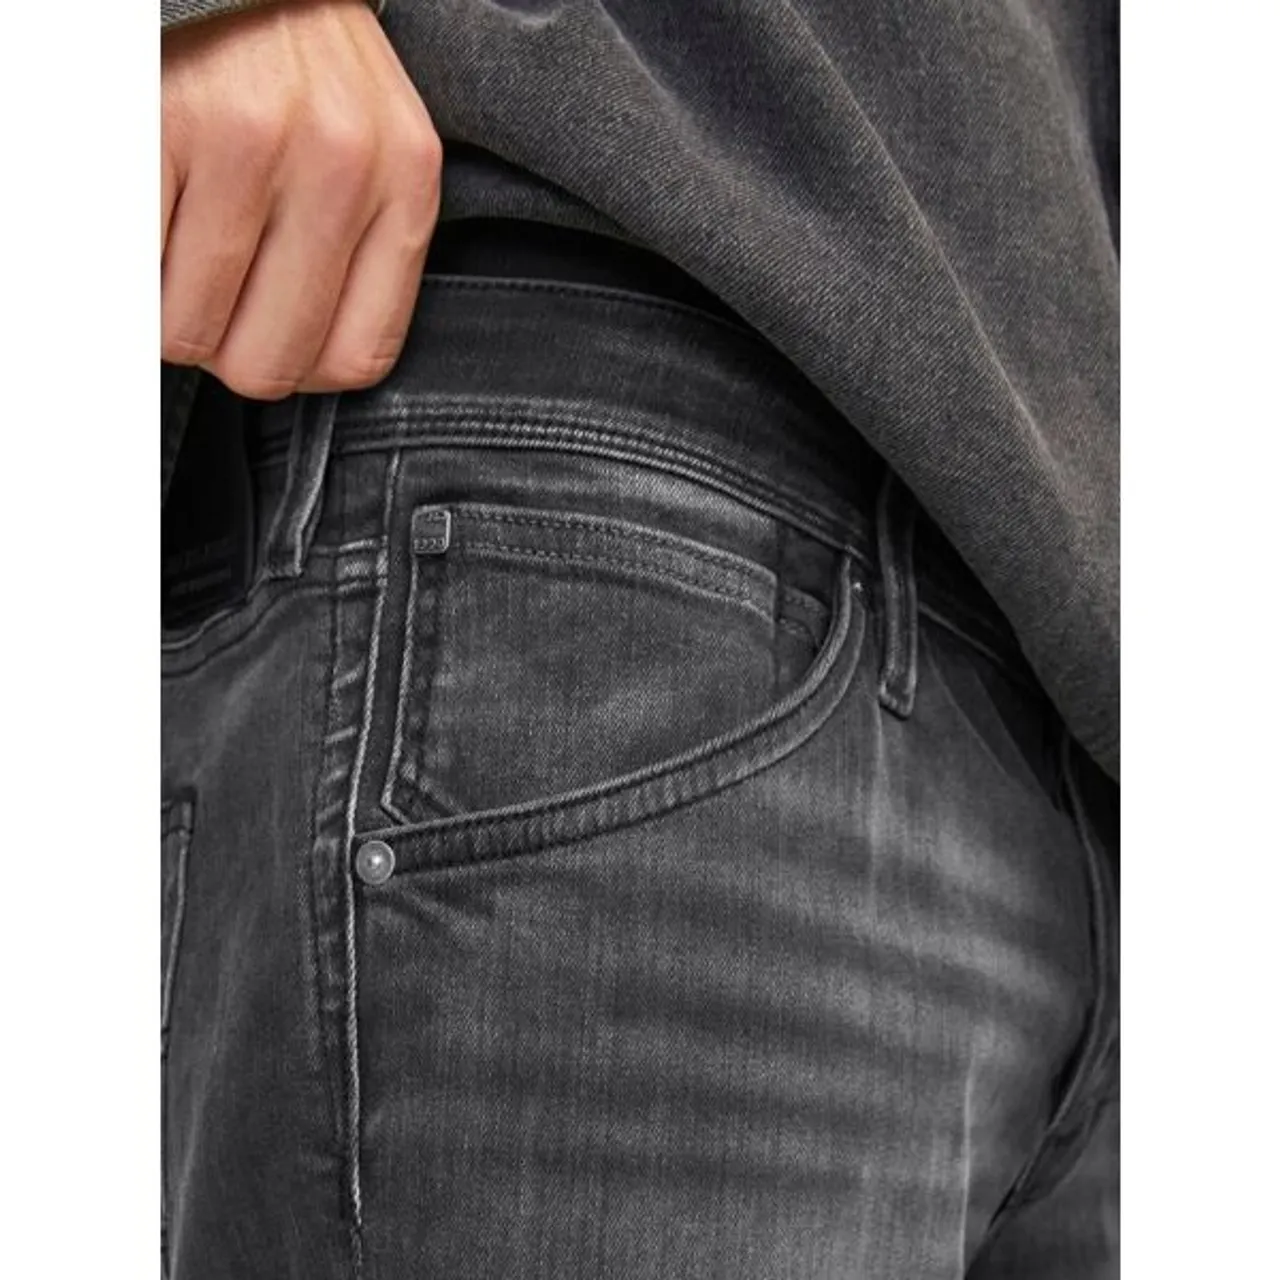 Slim-fit-Jeans JACK & JONES "JJIGLENN JJFOX 50SPS CB 036 NOOS" Gr. 32, Länge 34, schwarz (black denim) Herren Jeans Slim Fit